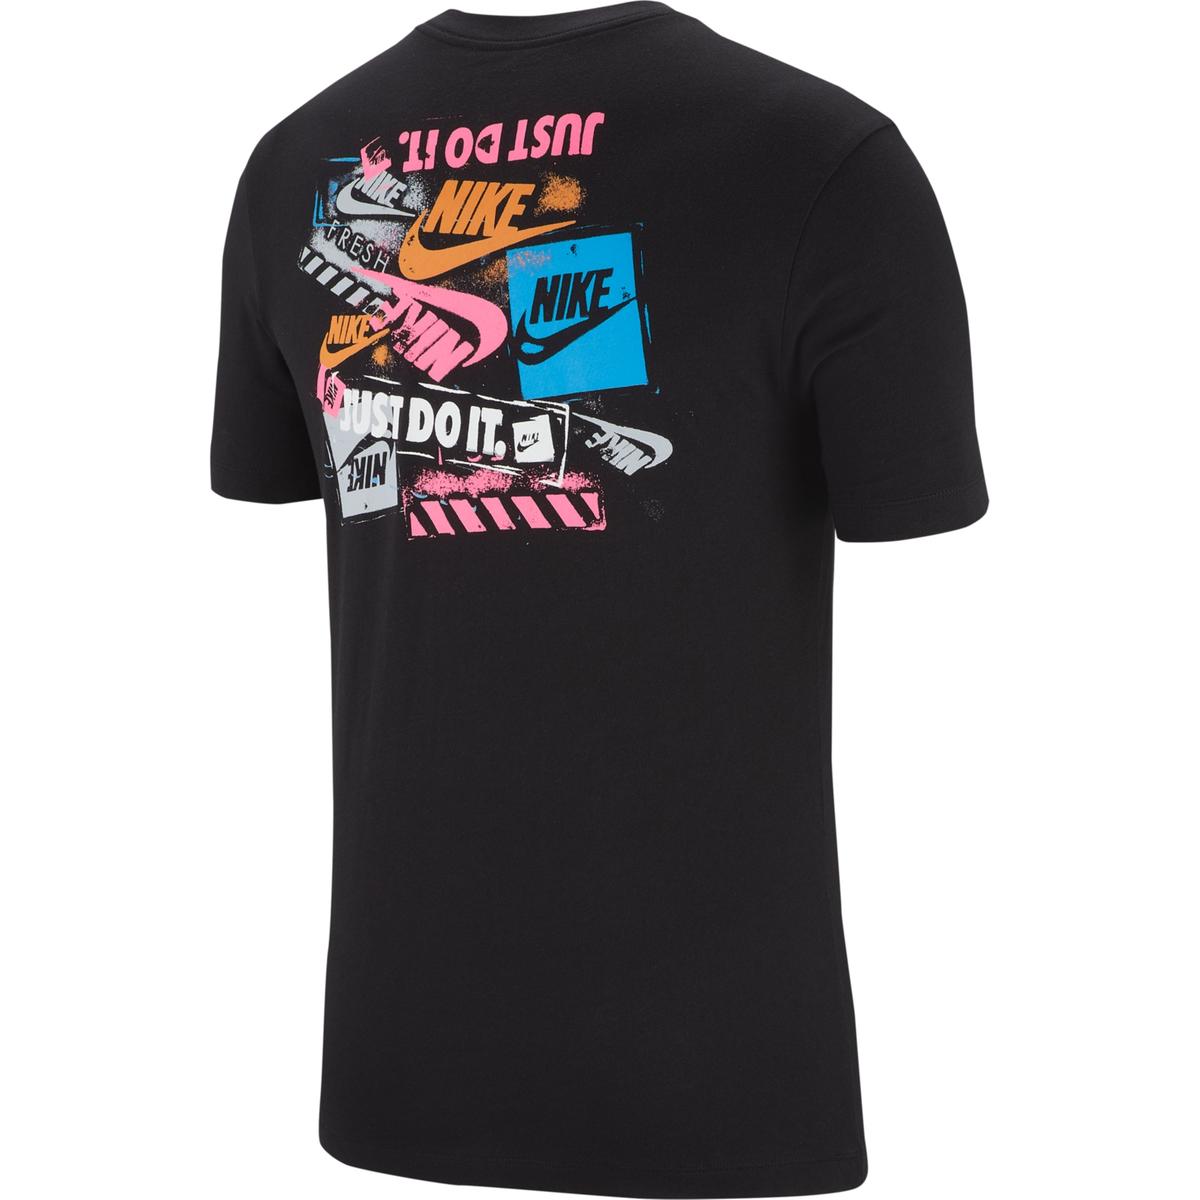 Nike Mens Black Graphic Logo Tee T-Shirt XL BHFO 1958 | eBay